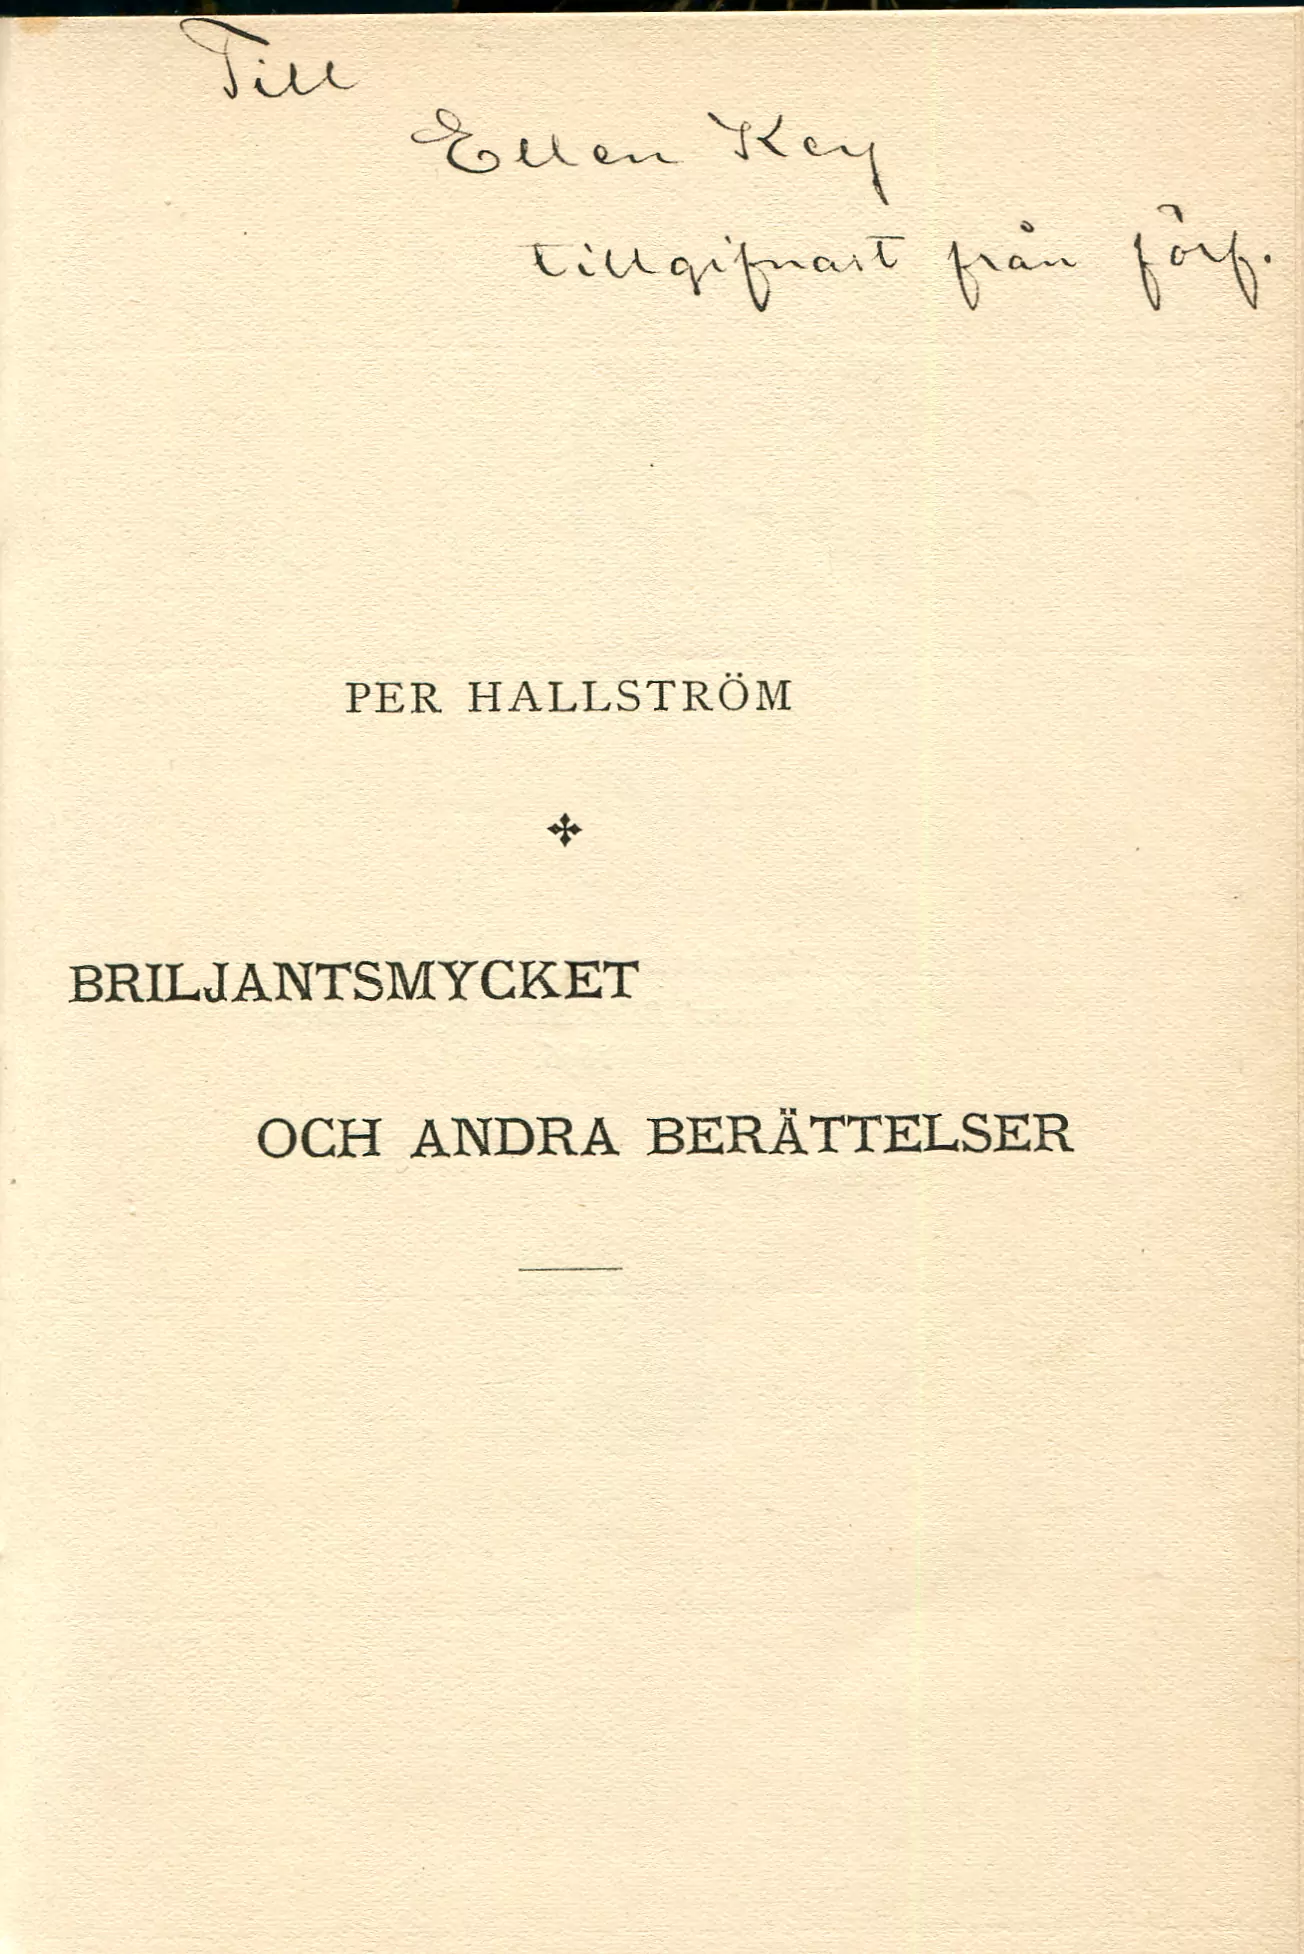 Briljantsmycket , Stockholm 1896